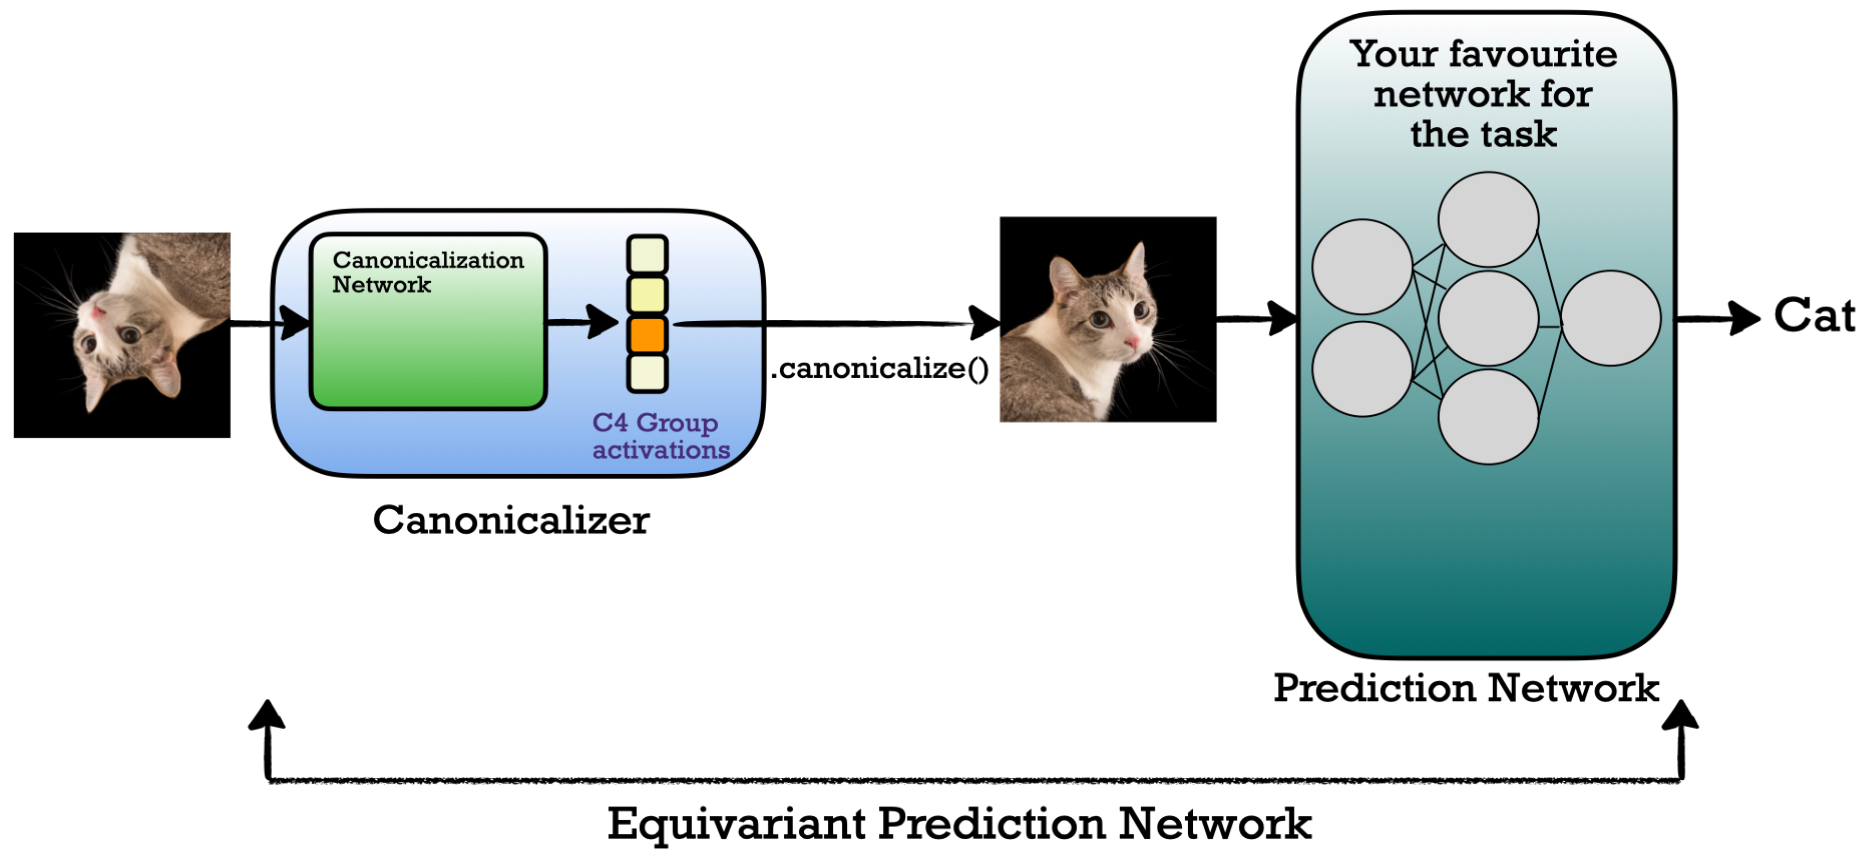 Equivariant adaptation of any prediction network